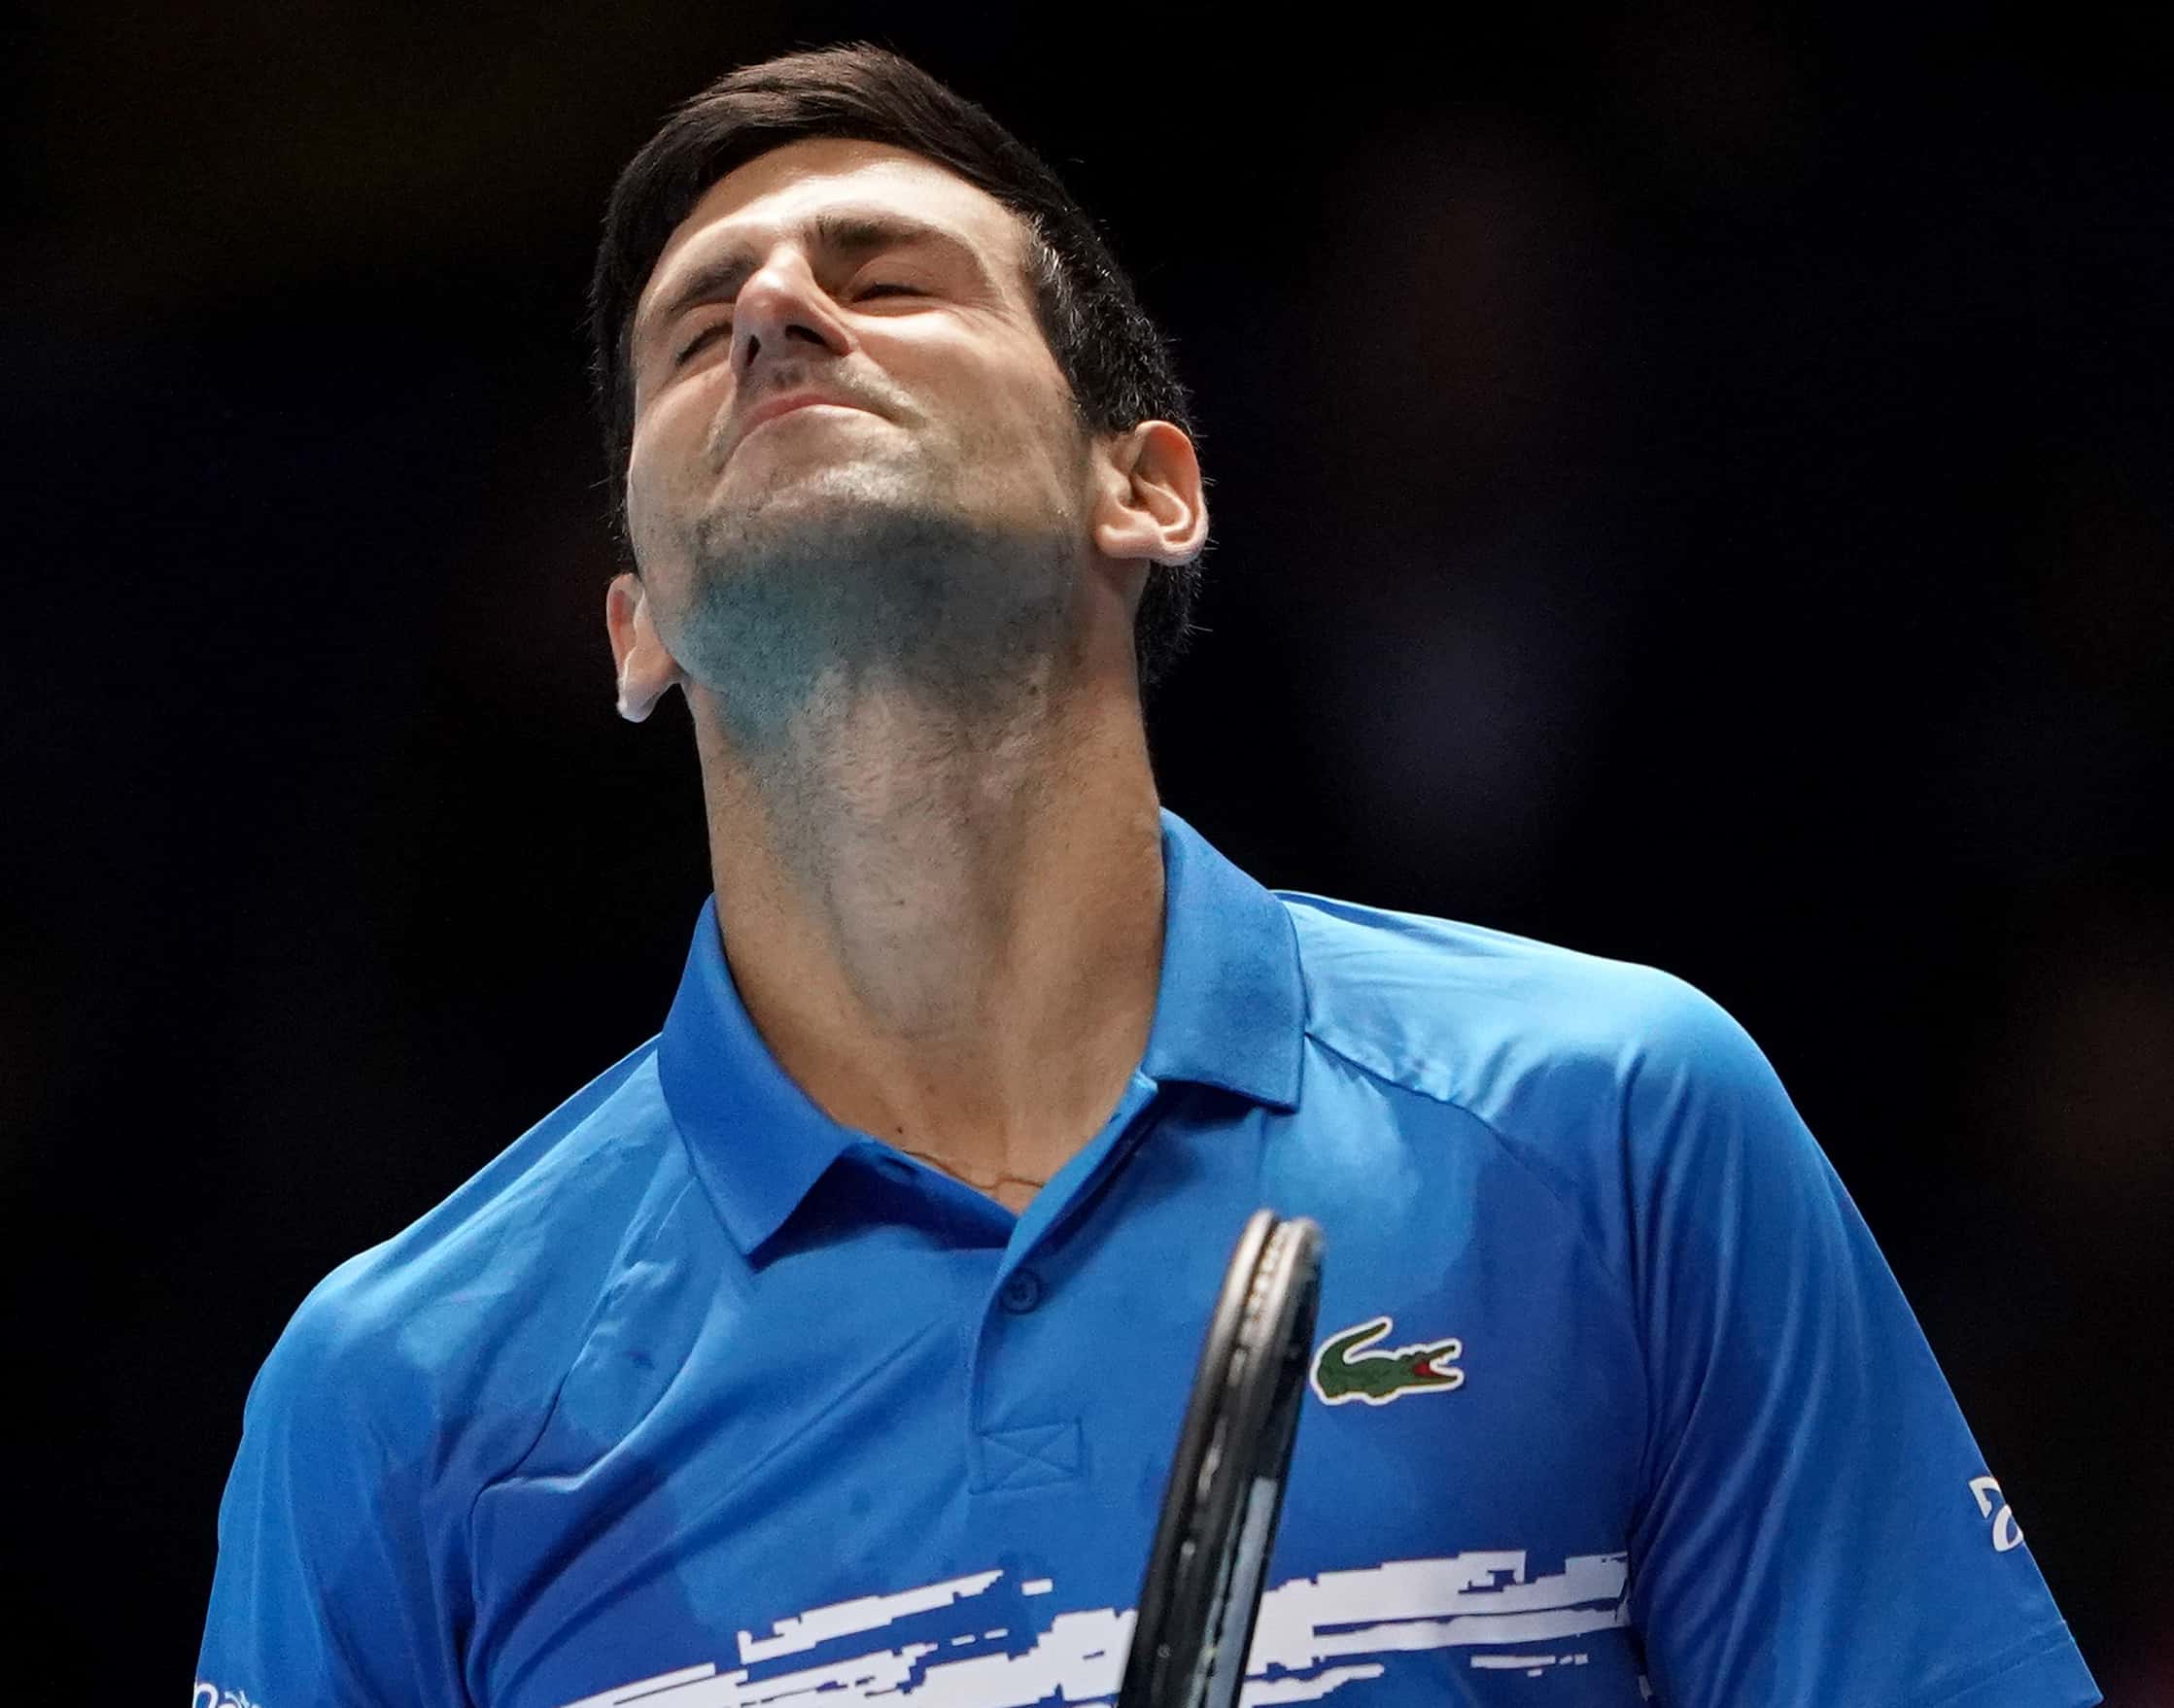 ‘Novaxx’ Djokovic gets meme treatment after being denied entry to Australia